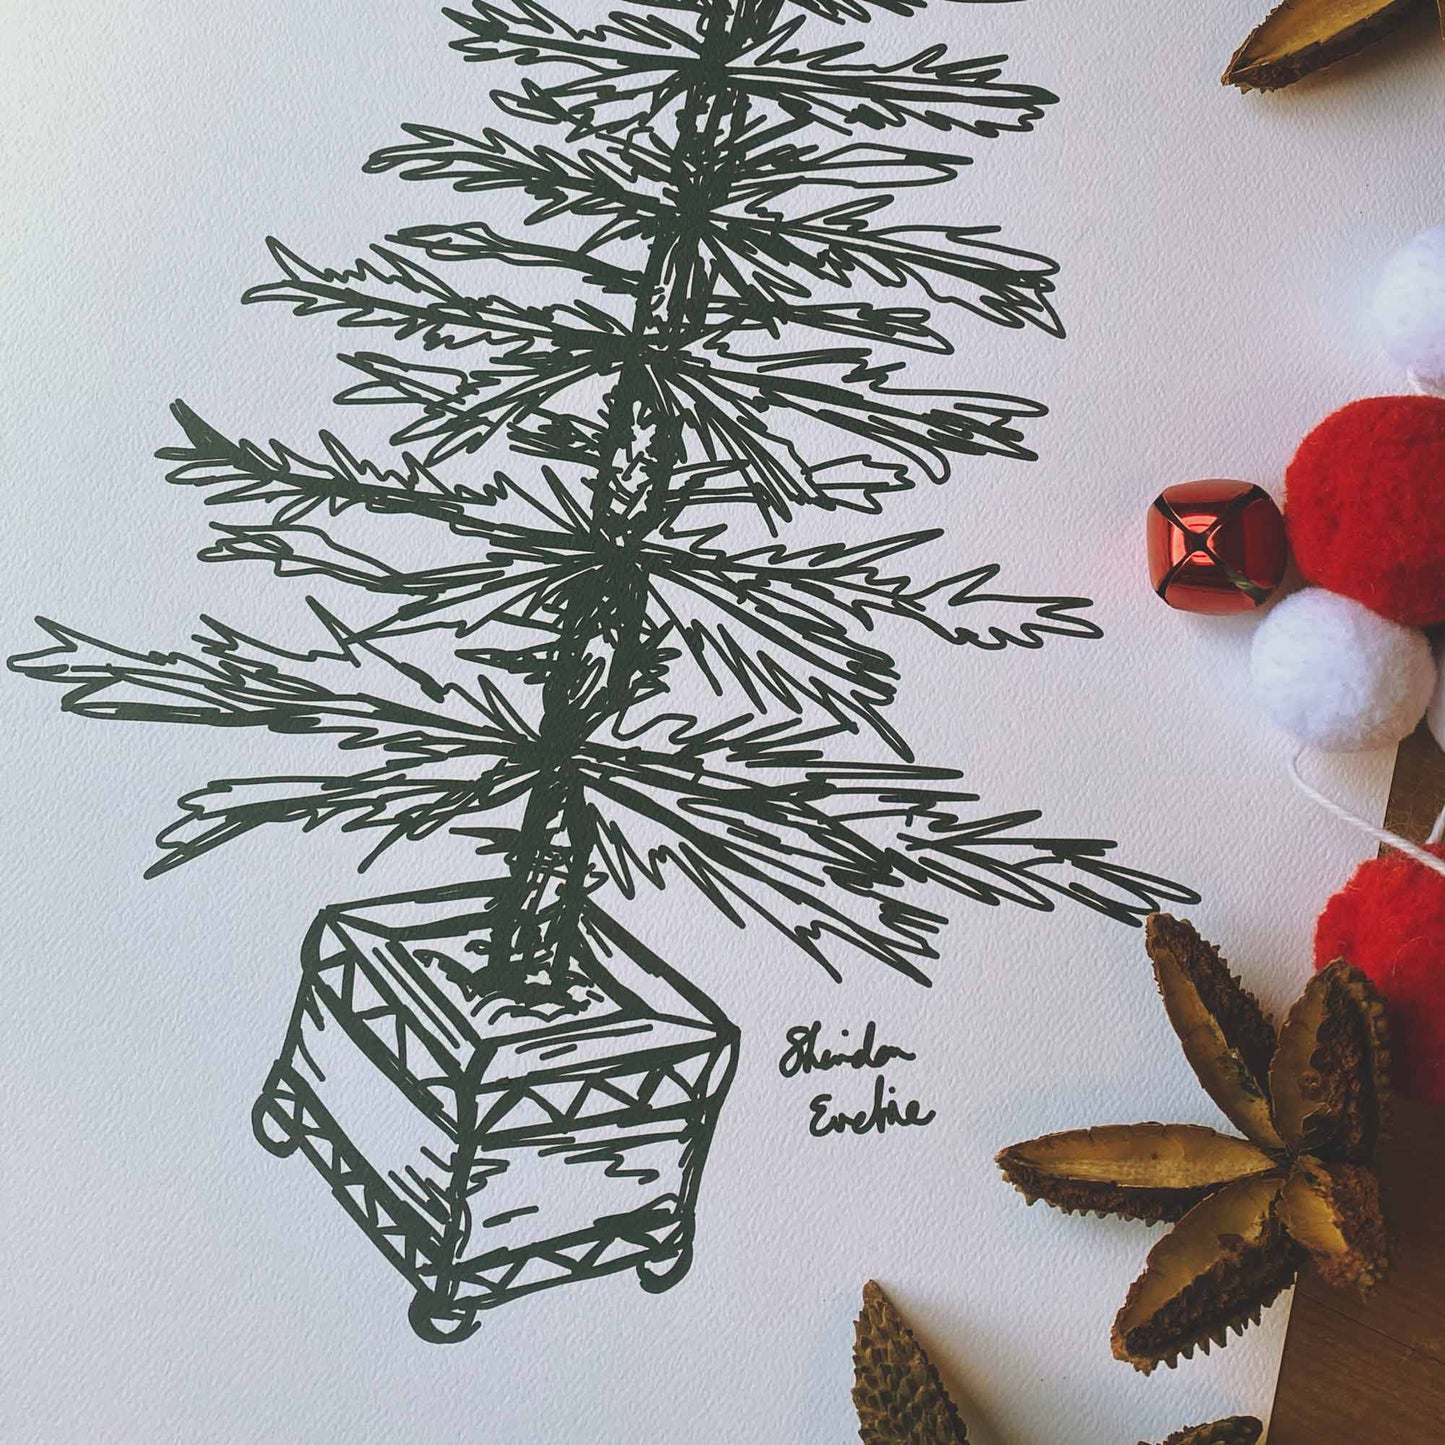 Scruffy Christmas Tree - Christmas Wall Decoration - Illustrated Christmas Tree